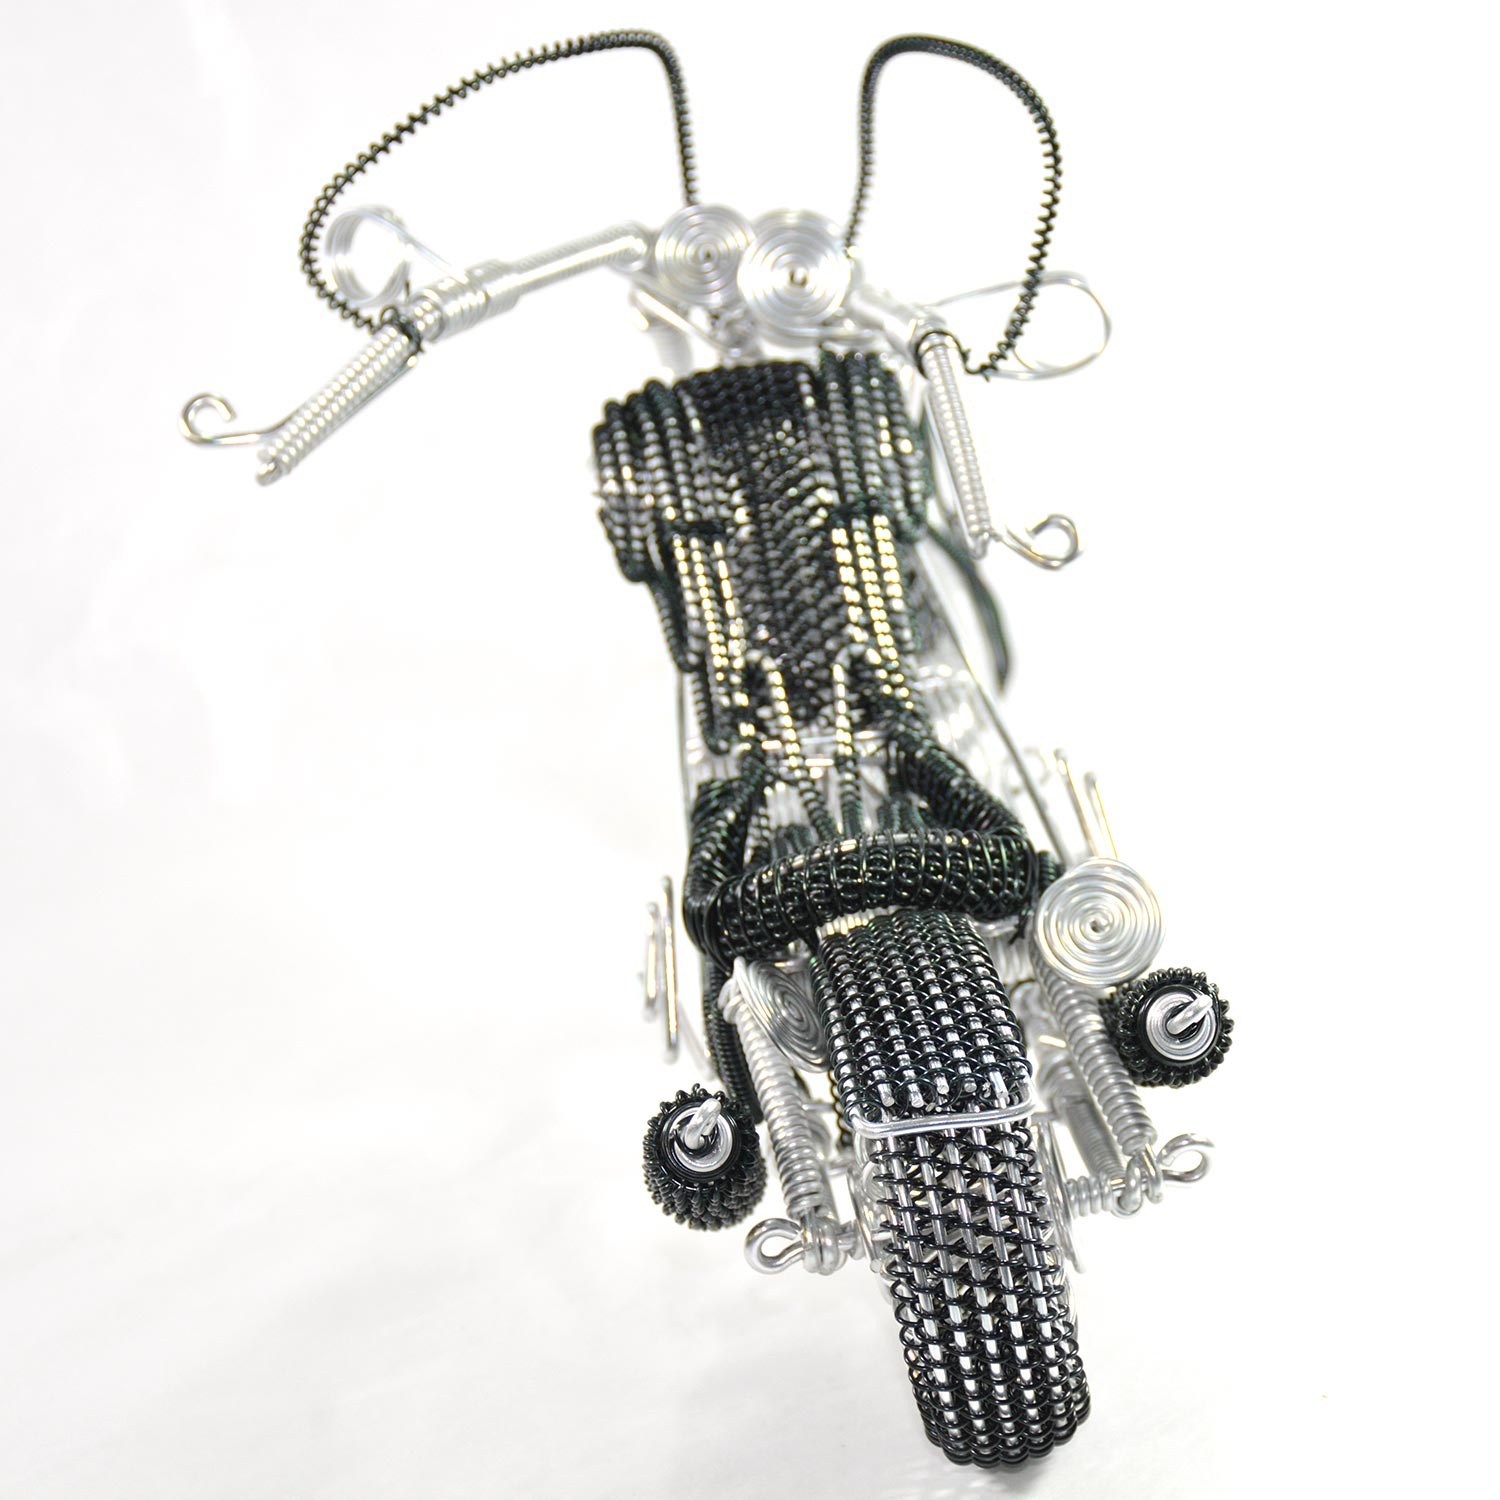 Harley-Davidson Motorcycle Model sculpture Wire Art Wire-Braided